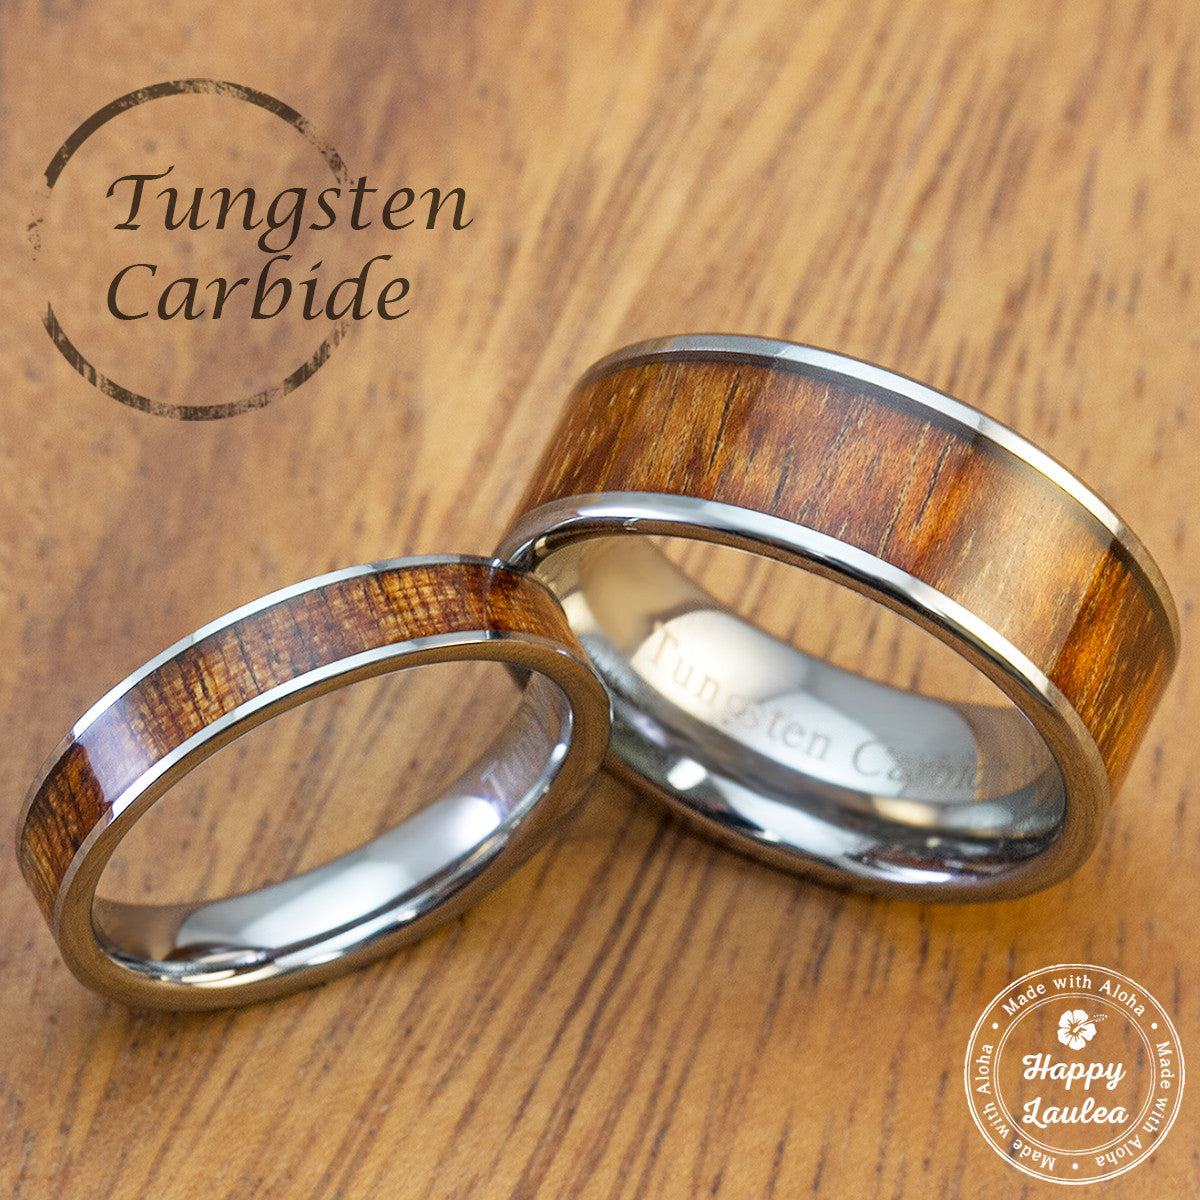 Pair of Tungsten Carbide Rings with Hawaiian Koa Wood Inlay - 4&8mm, Flat Shape Comfort Fitment